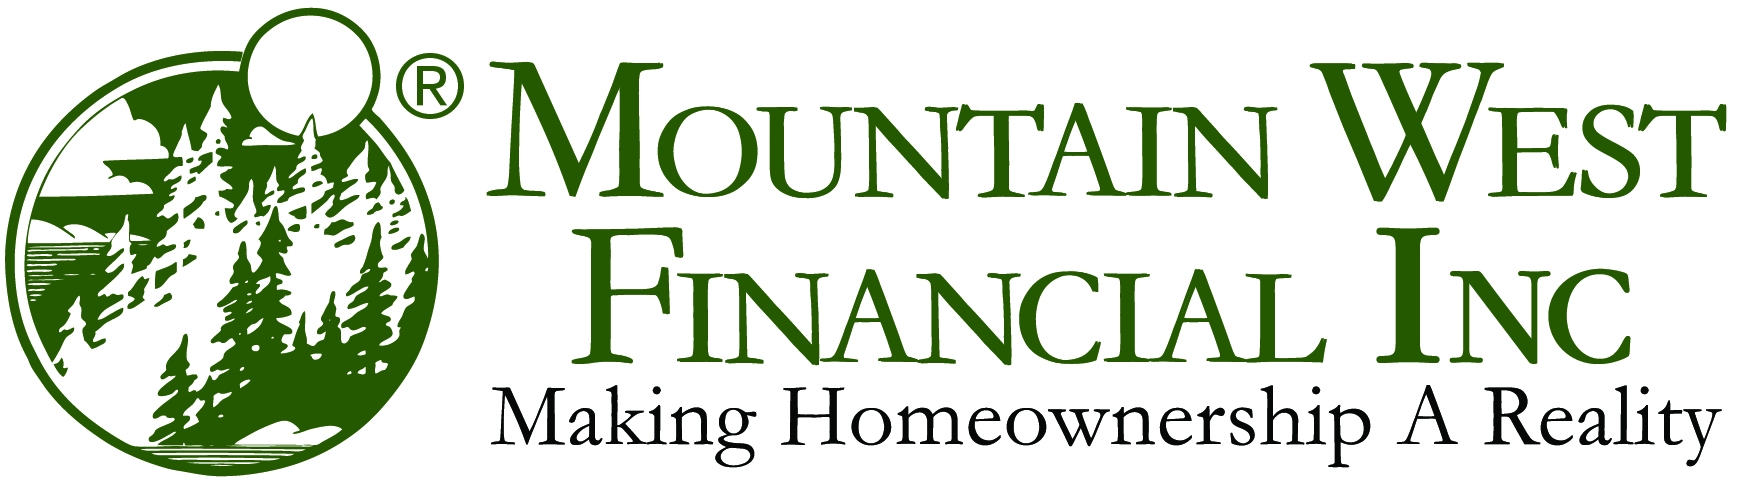 Mountain West Financial, Inc.